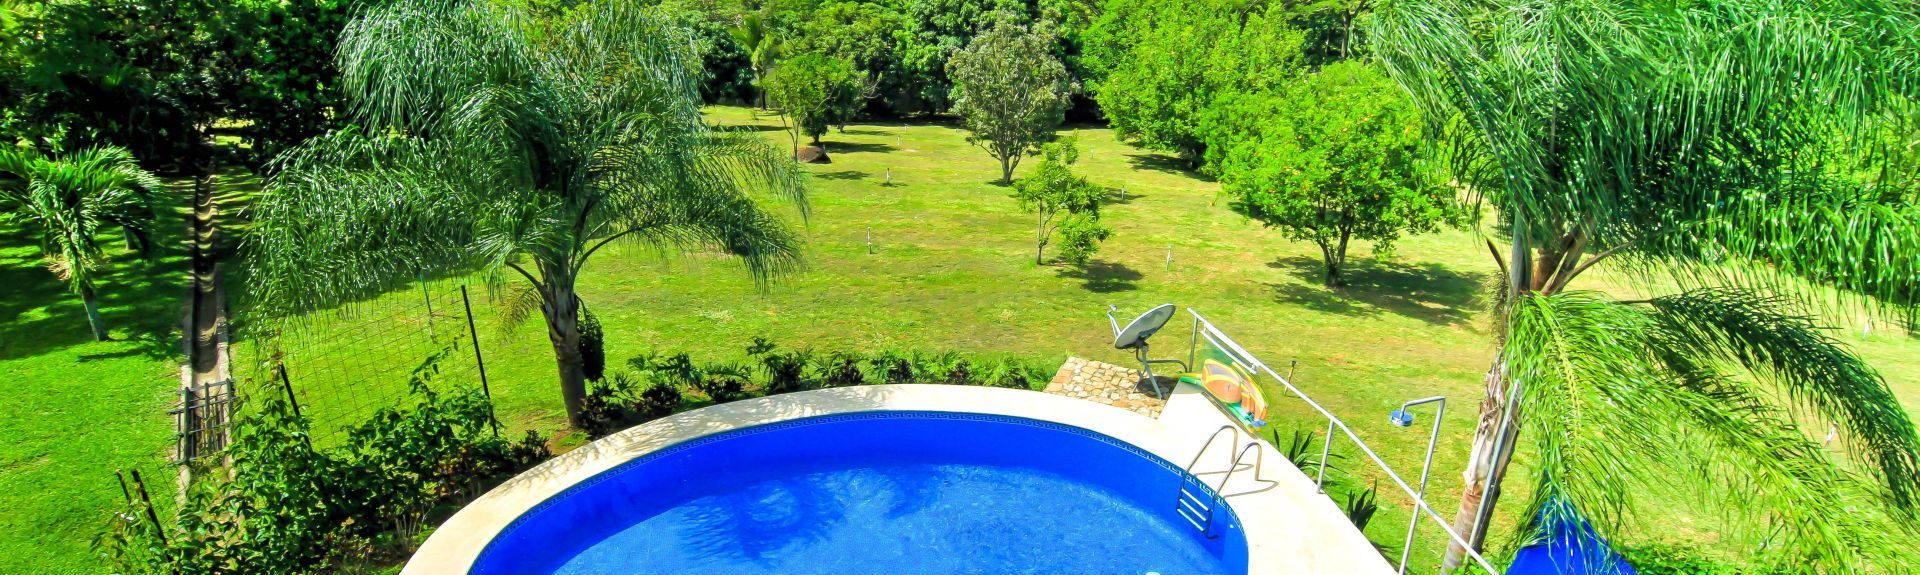 Grecia Vacation Rentals: house rentals & more | Vrbo